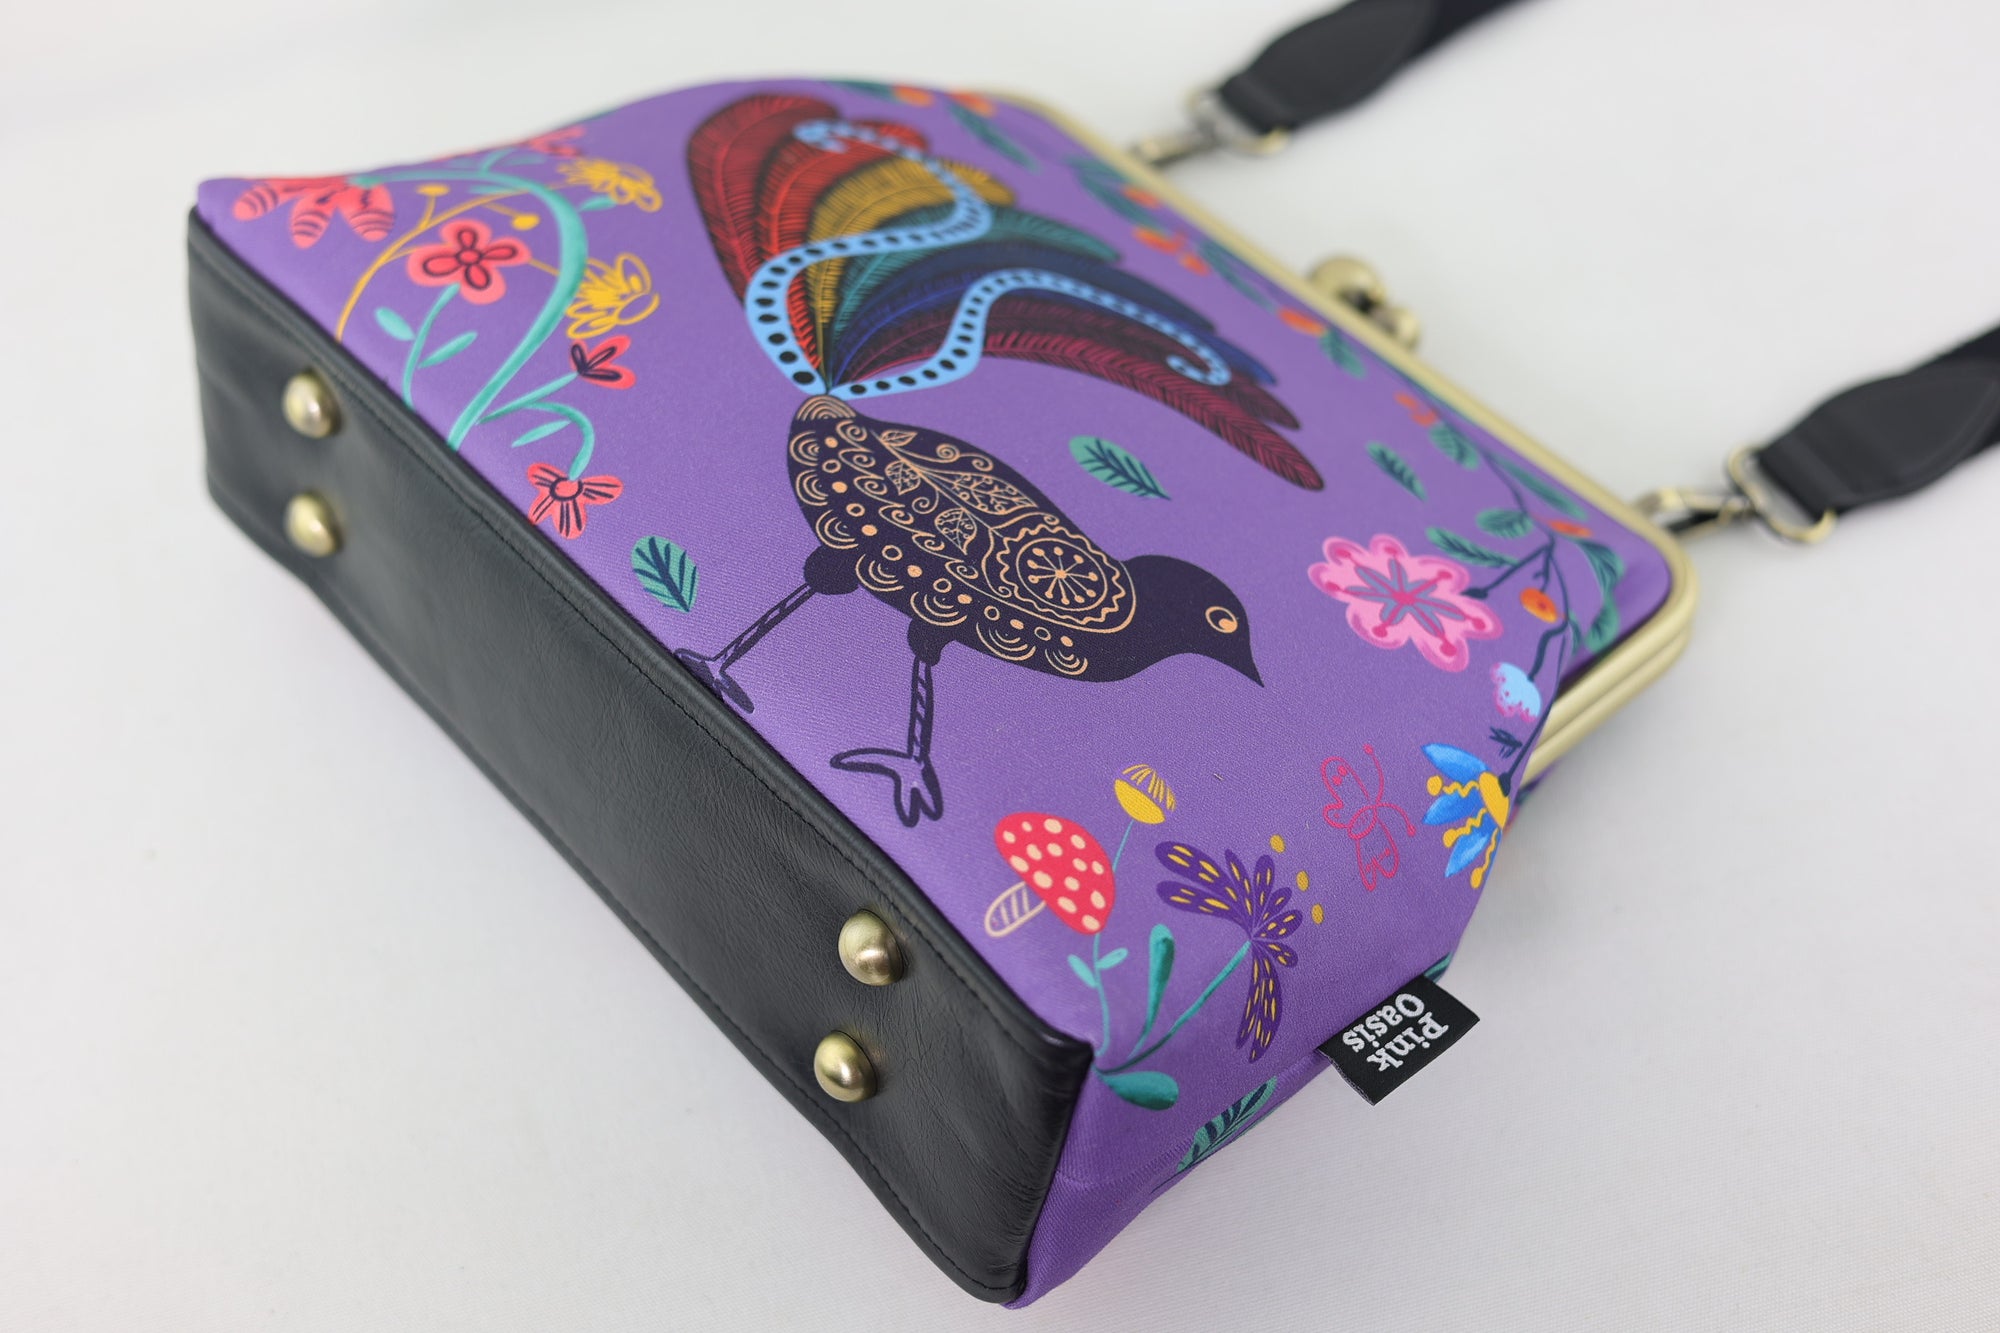 Lyre Bird Crossbody Bag with Webbing Strap | PINK OASIS